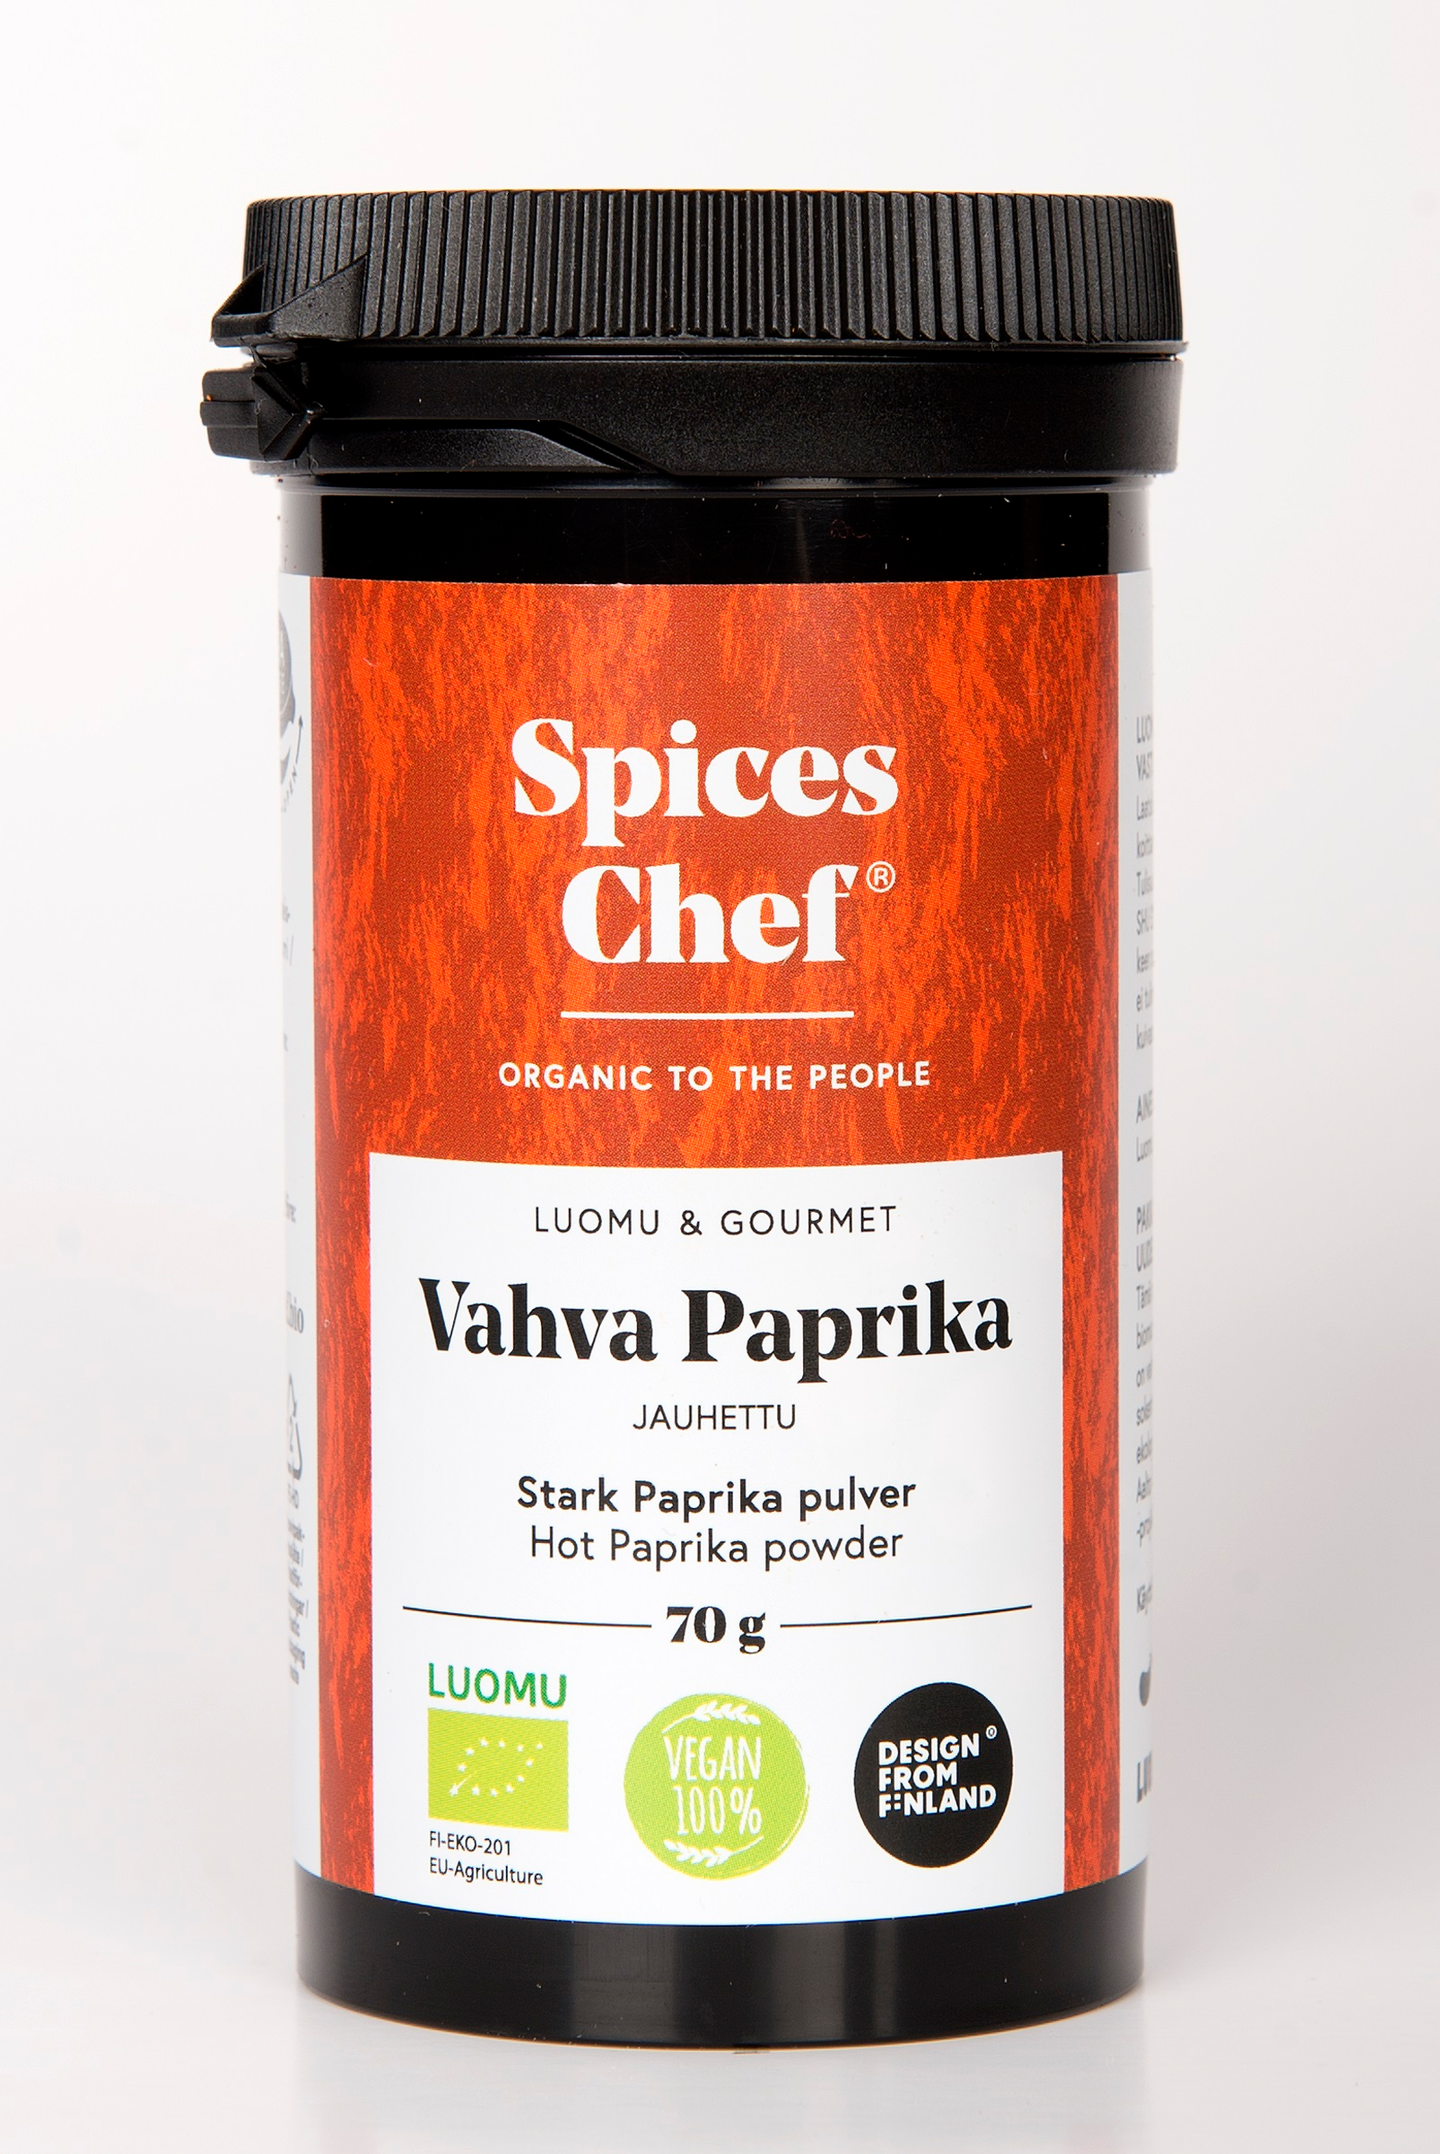 Spices Chef luomu vahva paprikajauhe 70g, BPA-vapaassa biomuovi maustepurkissa.